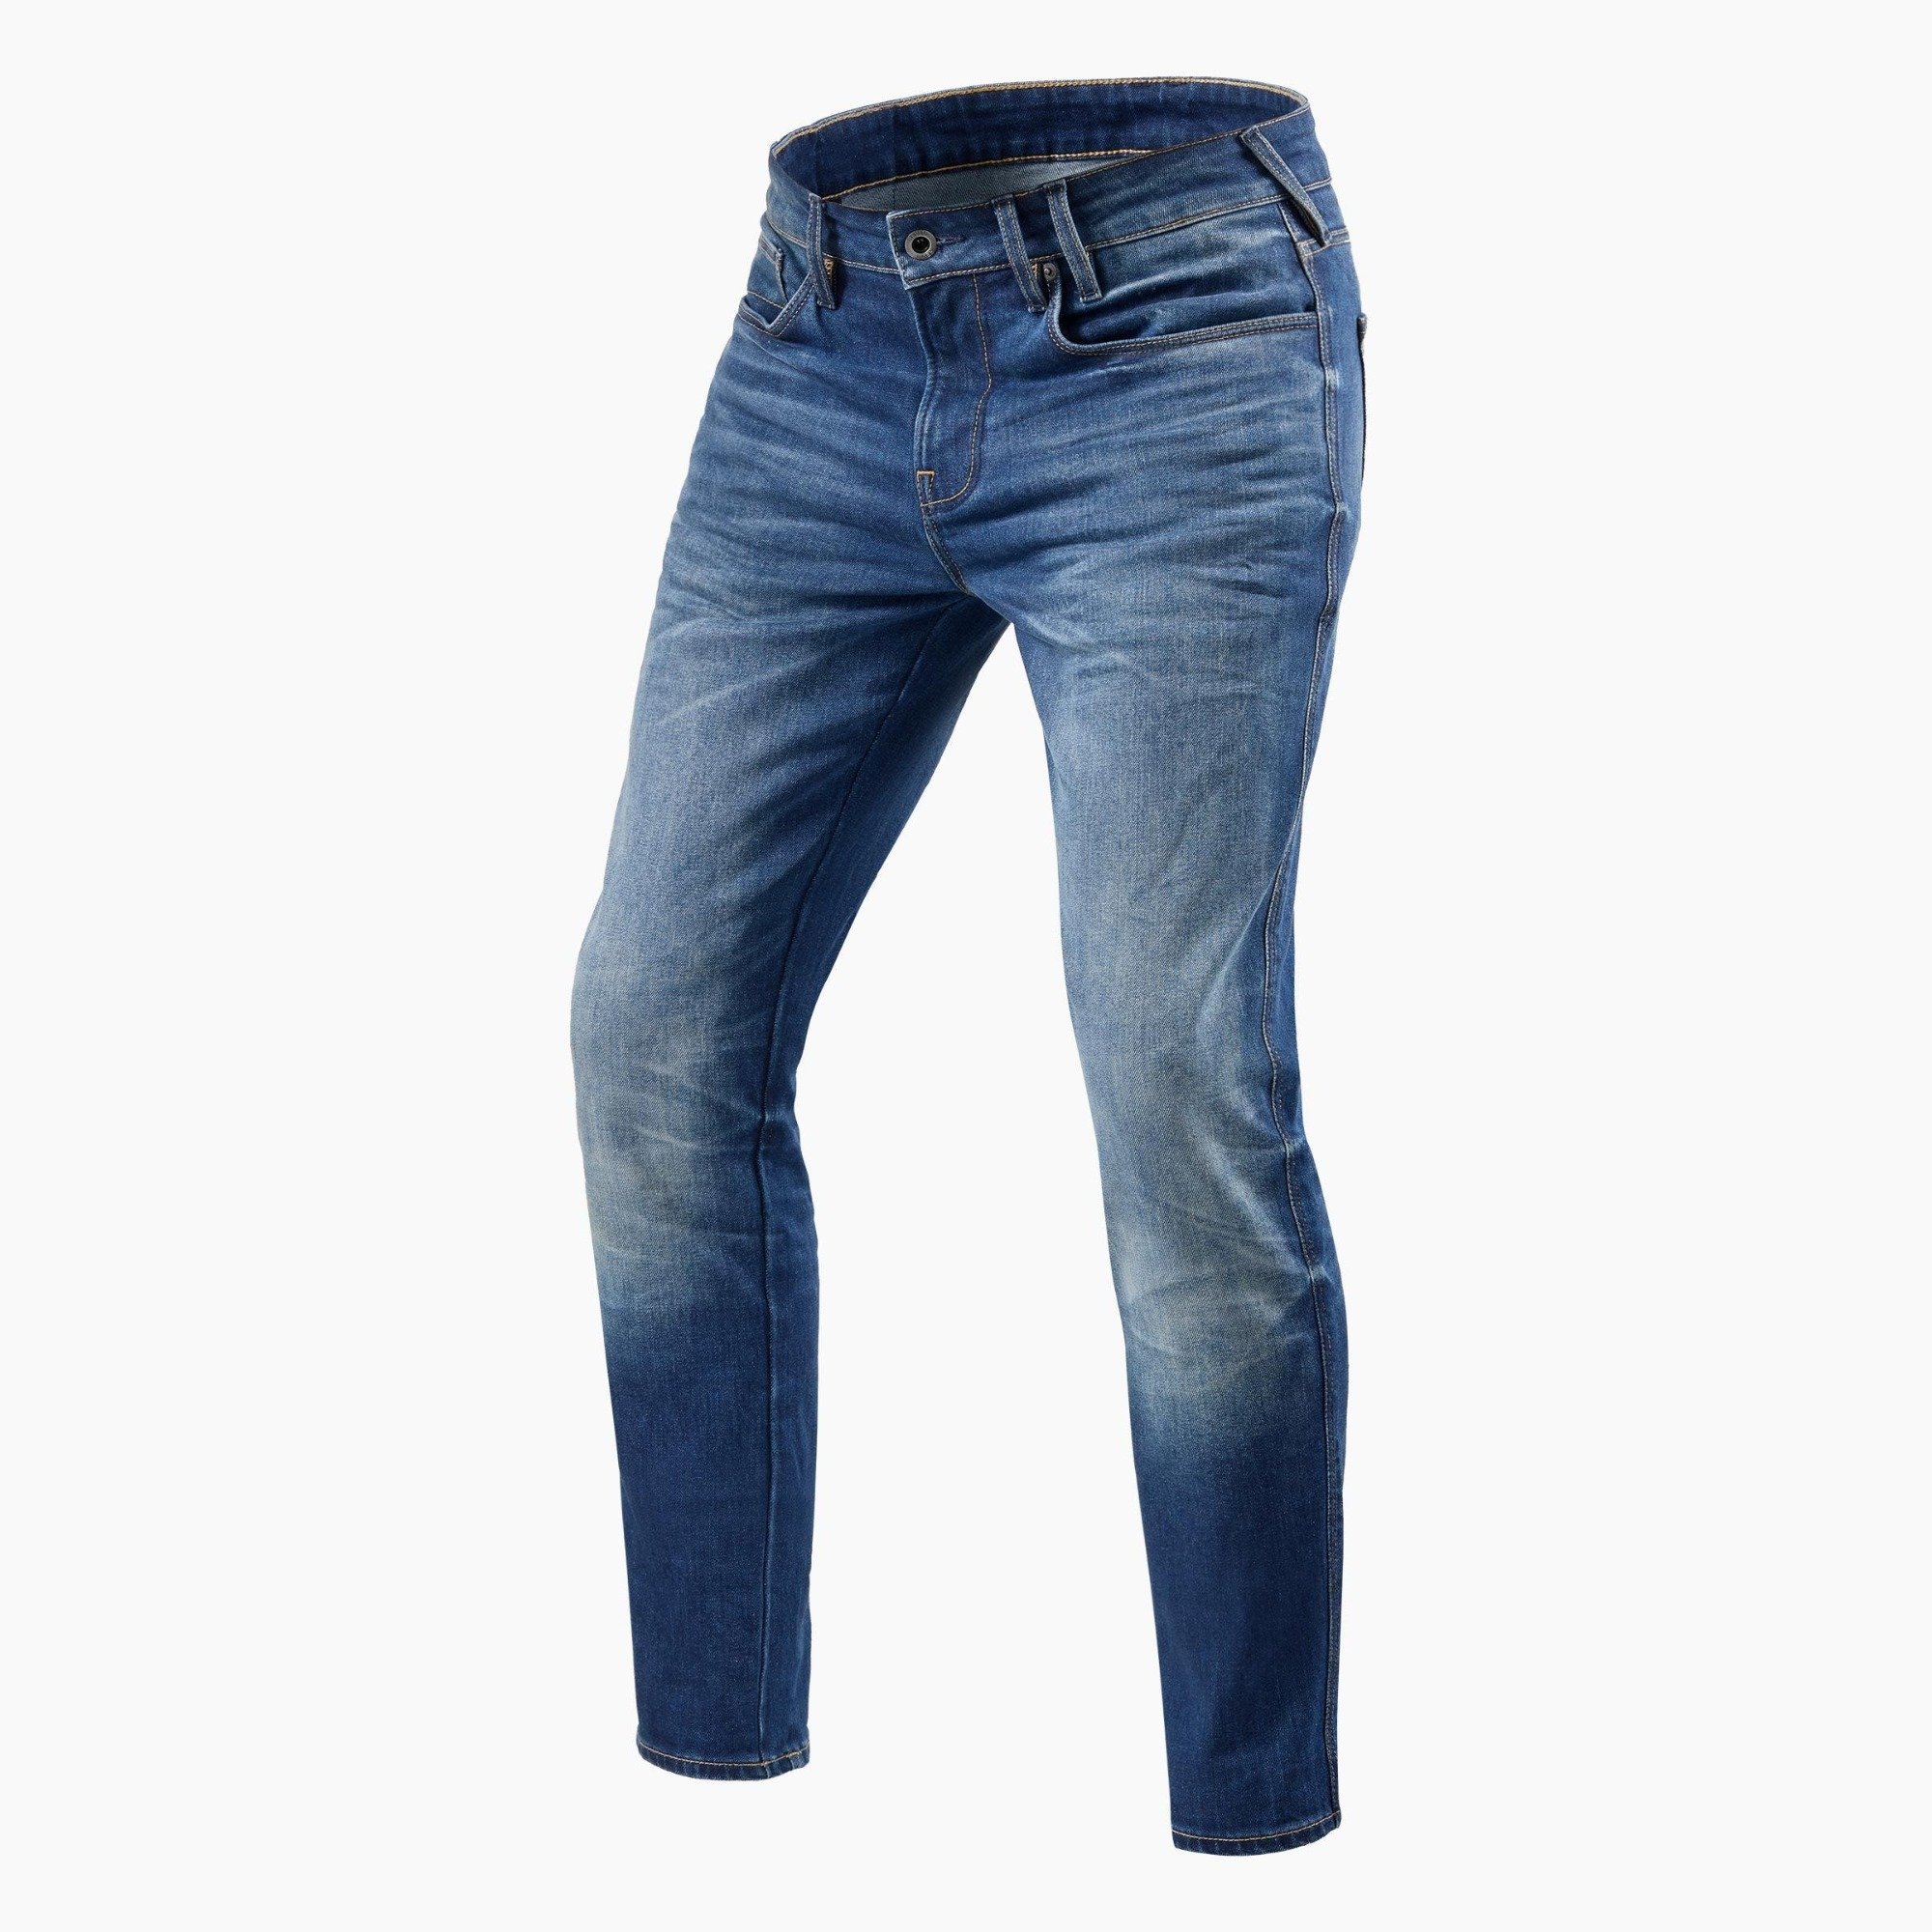 Image of REV'IT! Jeans Carlin SK Mid Blue Used Motorcycle Jeans Size L34/W30 EN